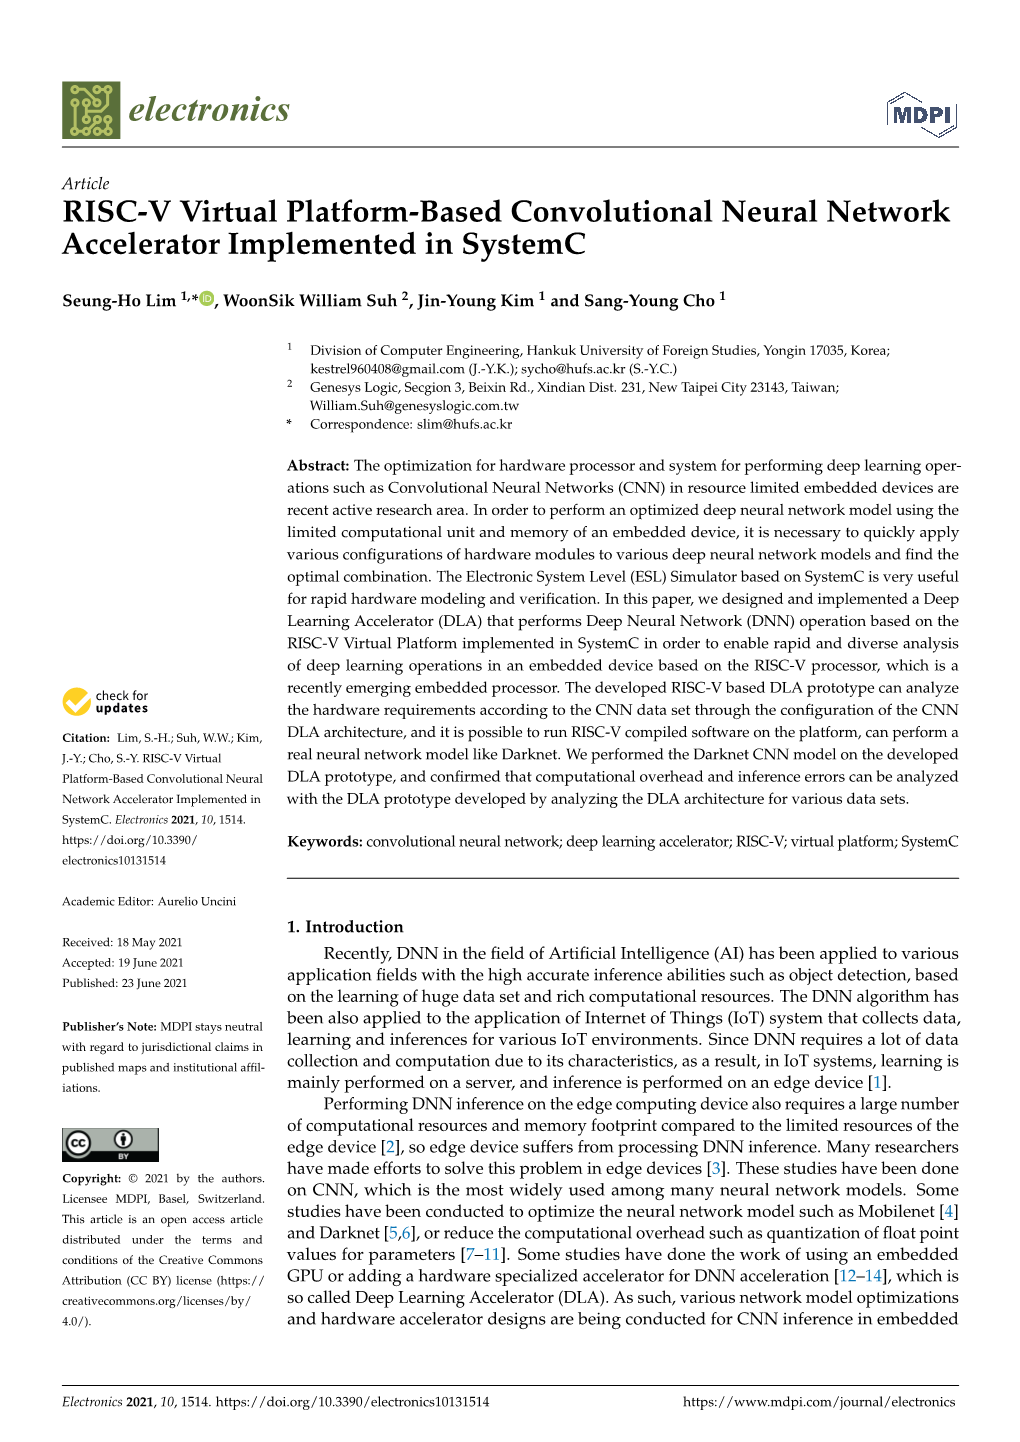 RISC-V Virtual Platform-Based Convolutional Neural Network Accelerator Implemented in Systemc